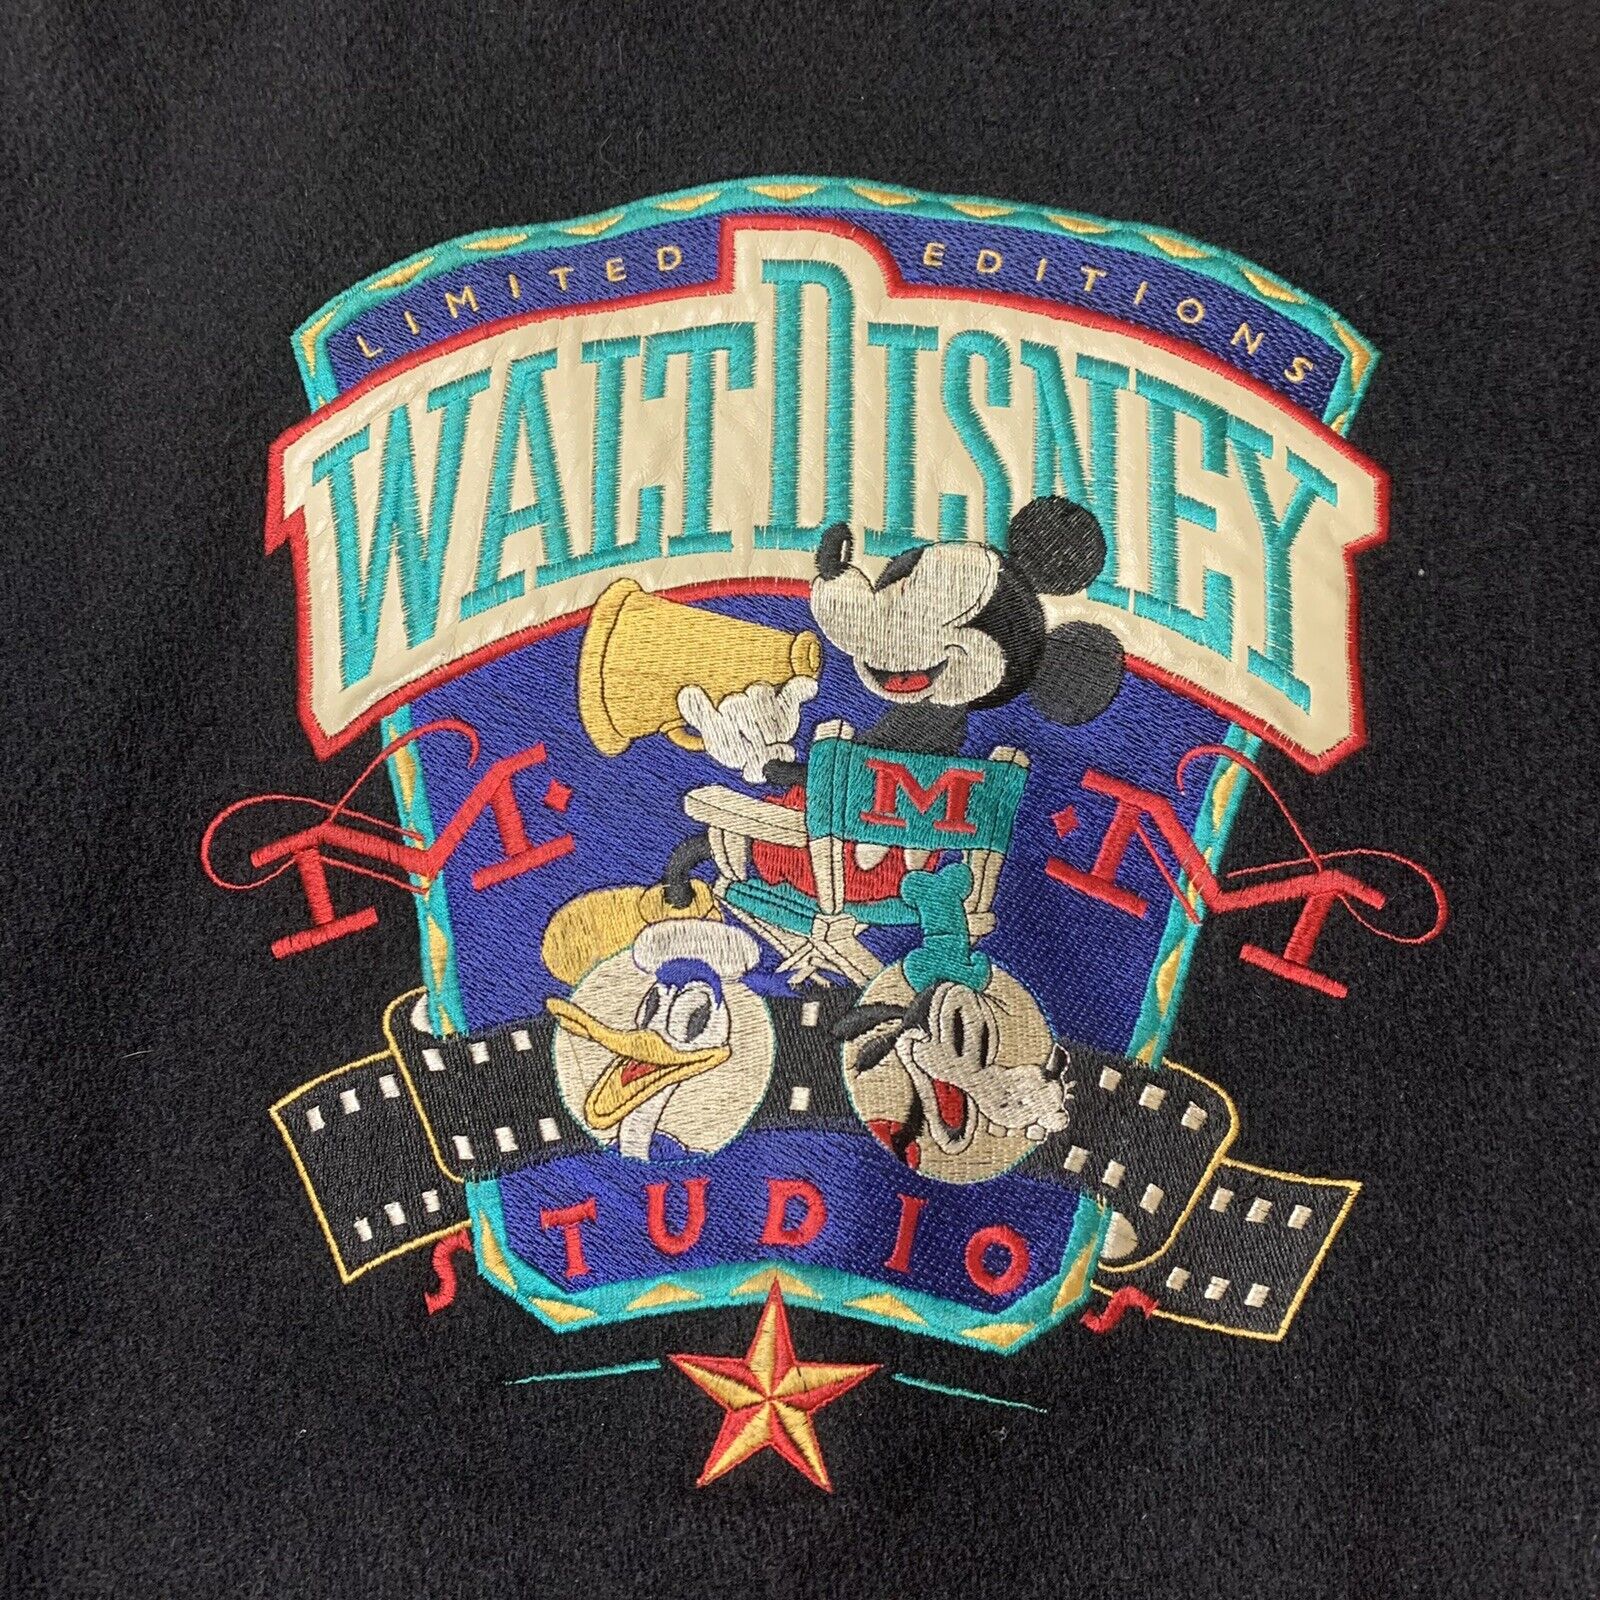 Vintage Walt Disney Studios Editions Varsity Jacket Embroidered Leather Rare XL